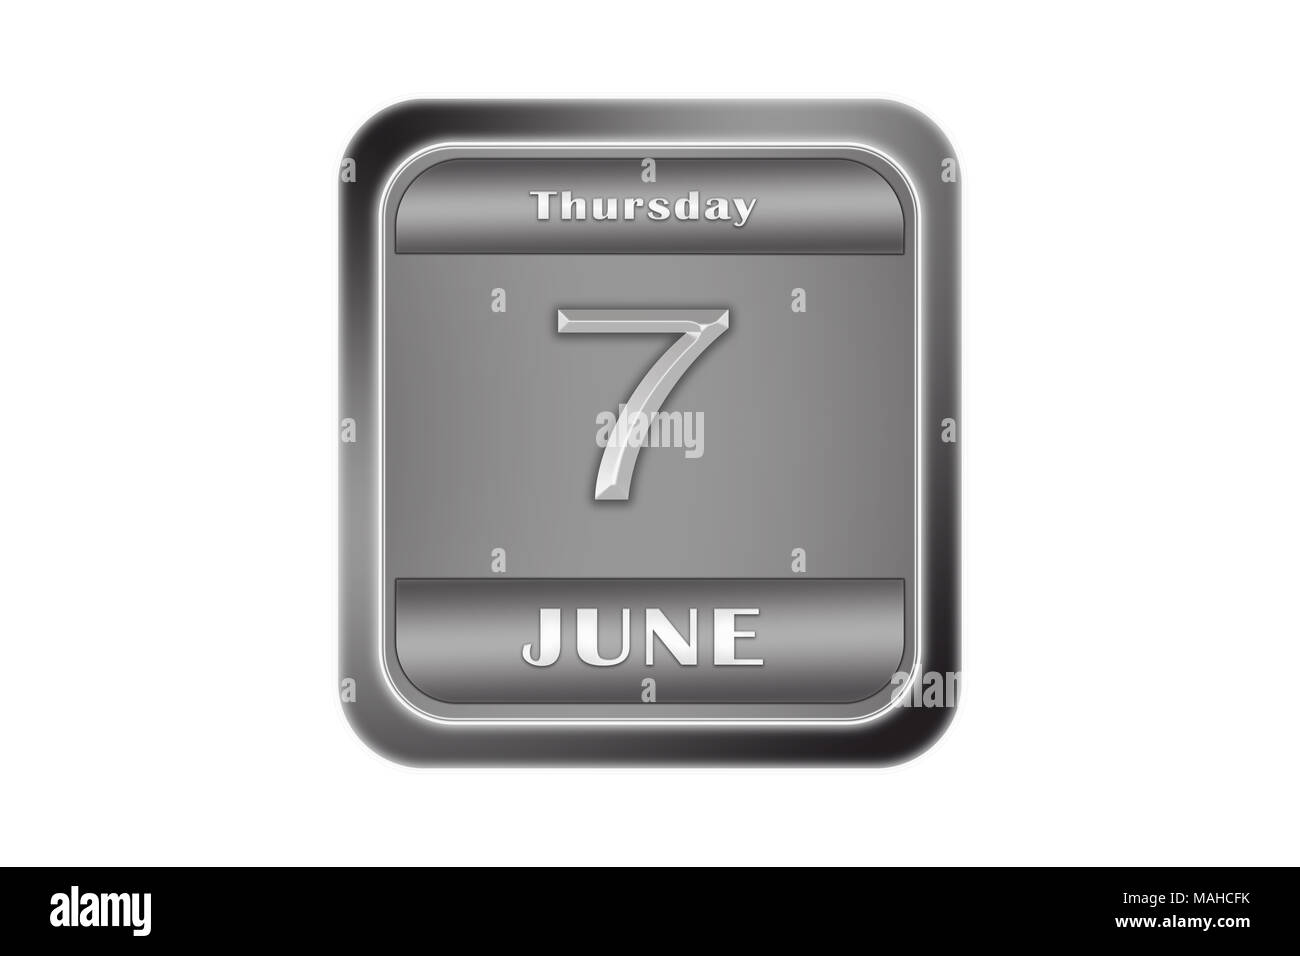 Date 7 June, Thursday written on a metal plate Stock Photo